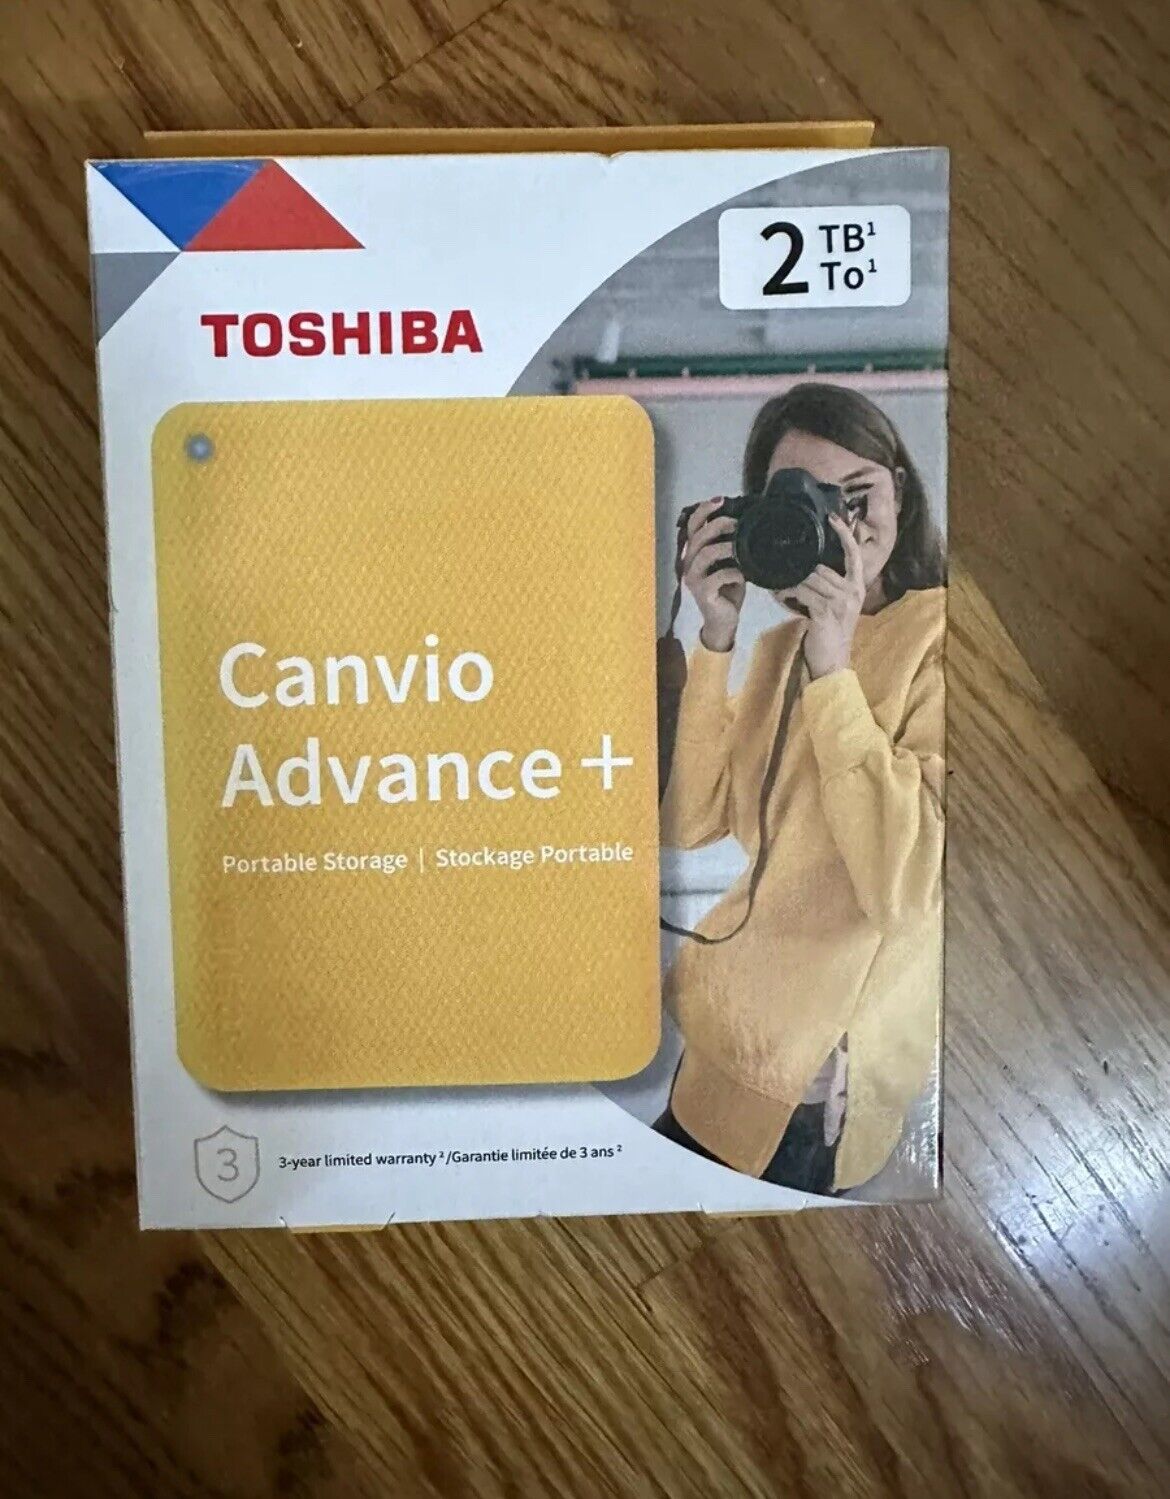 Toshiba Canvio Advance Plus Portable External 2TB Hard Drive hdtca20xycab new